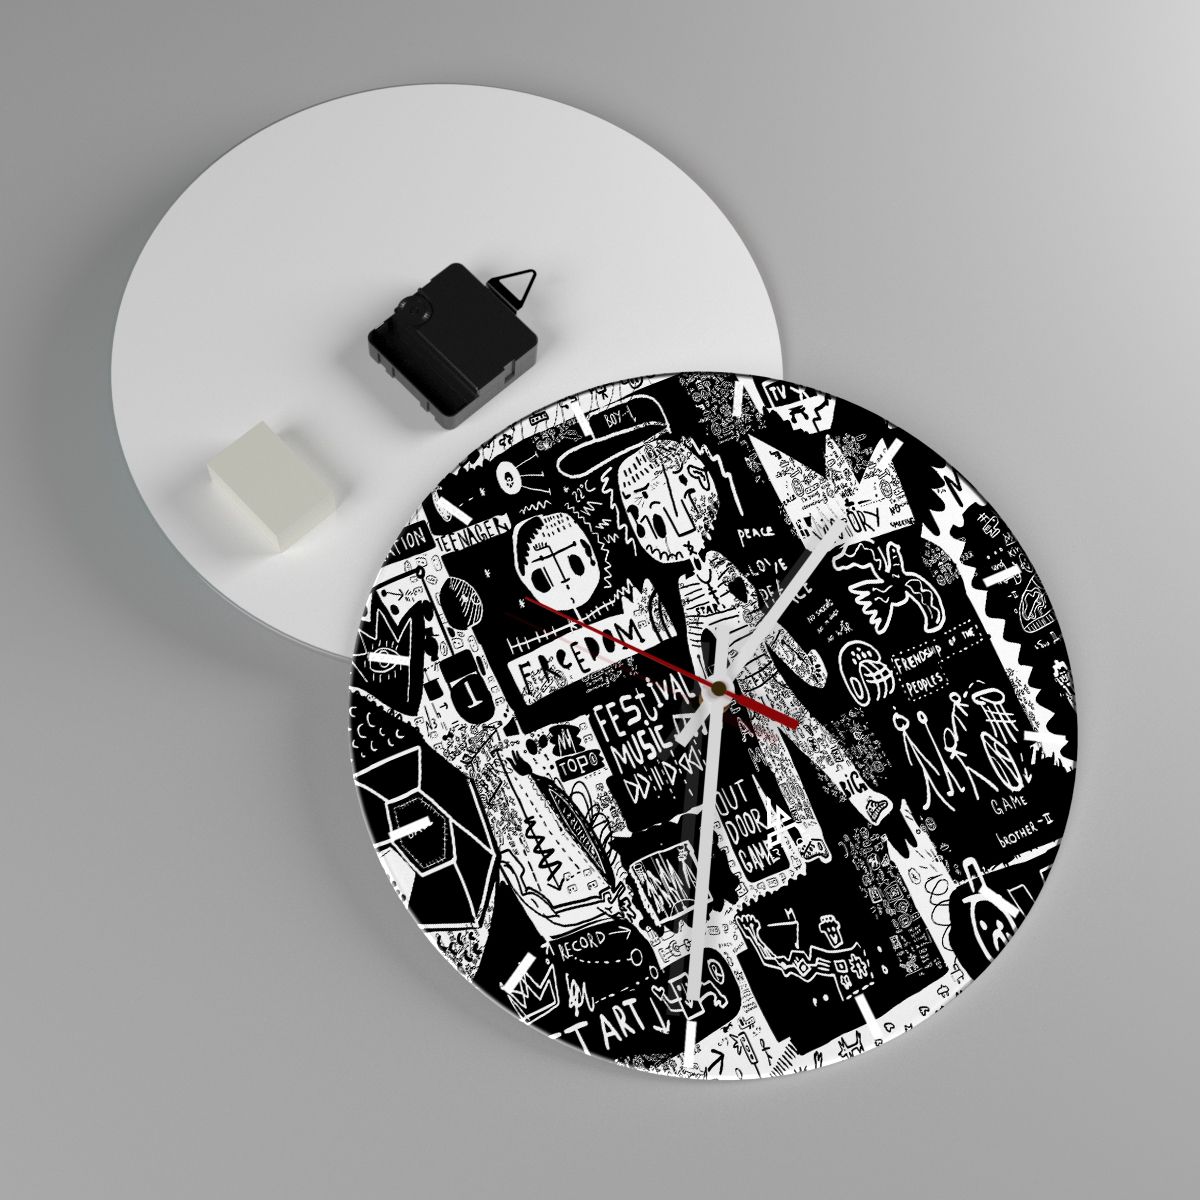 Reloj de pared Pintada, Reloj de pared Arte, Reloj de pared Patrón Moderno, Reloj de pared Gráficos, Reloj de pared En Blanco Y Negro